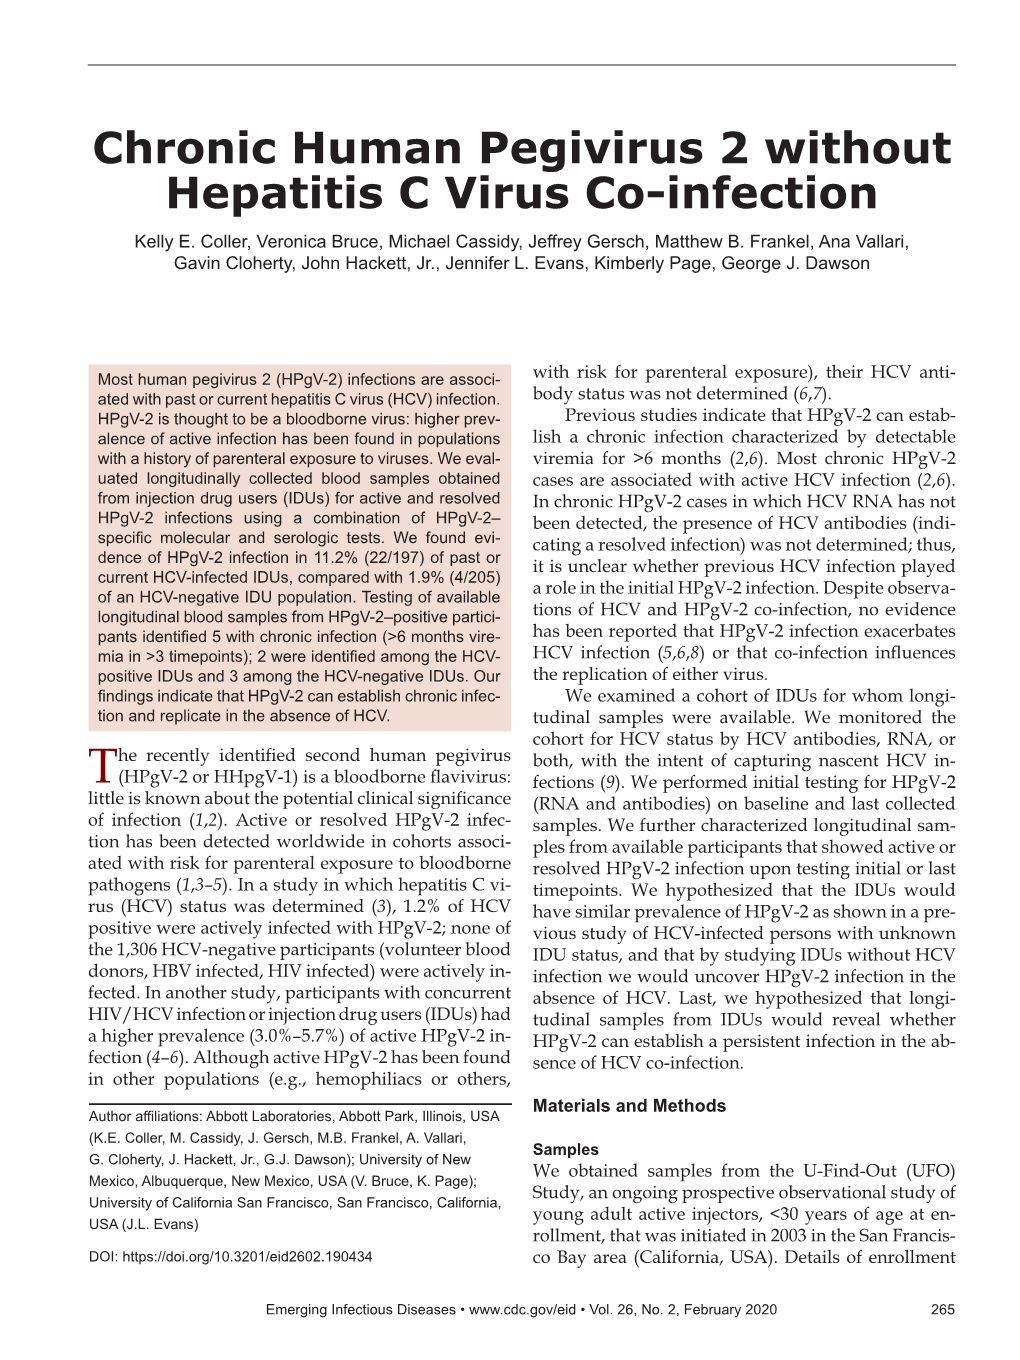 Chronic Human Pegivirus 2 Without Hepatitis C Virus Co-Infection Kelly E